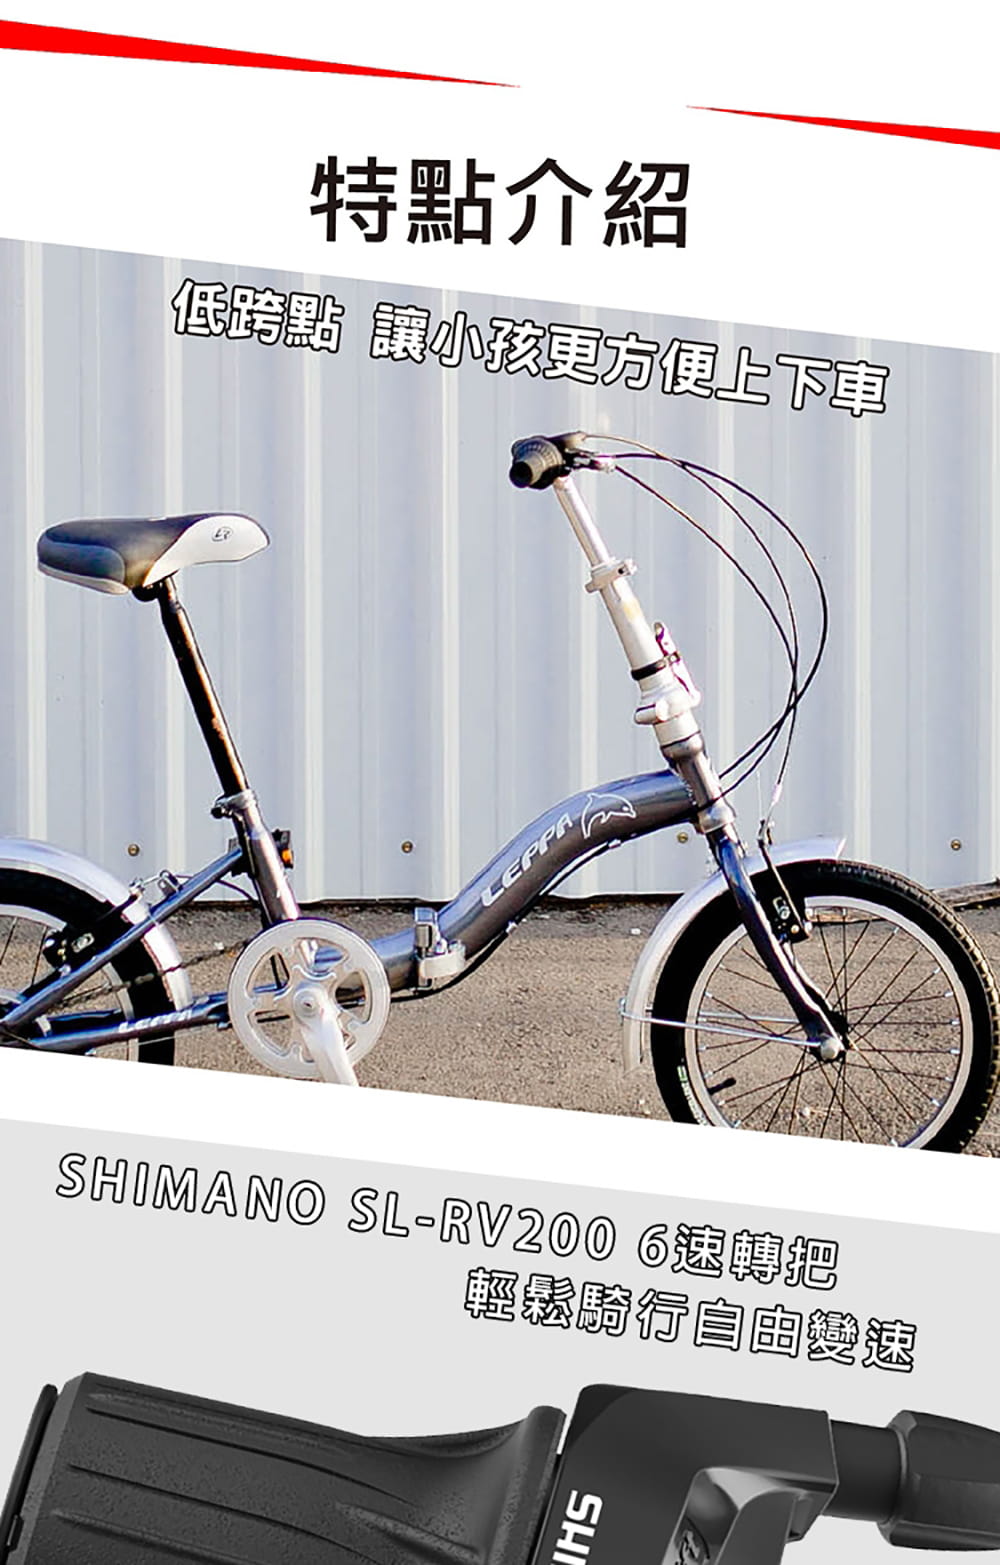 BIKEONE L1 LITE SHIMANO轉把16吋6速摺疊兒童腳踏車簡約設計風格附擋泥版後貨架 3